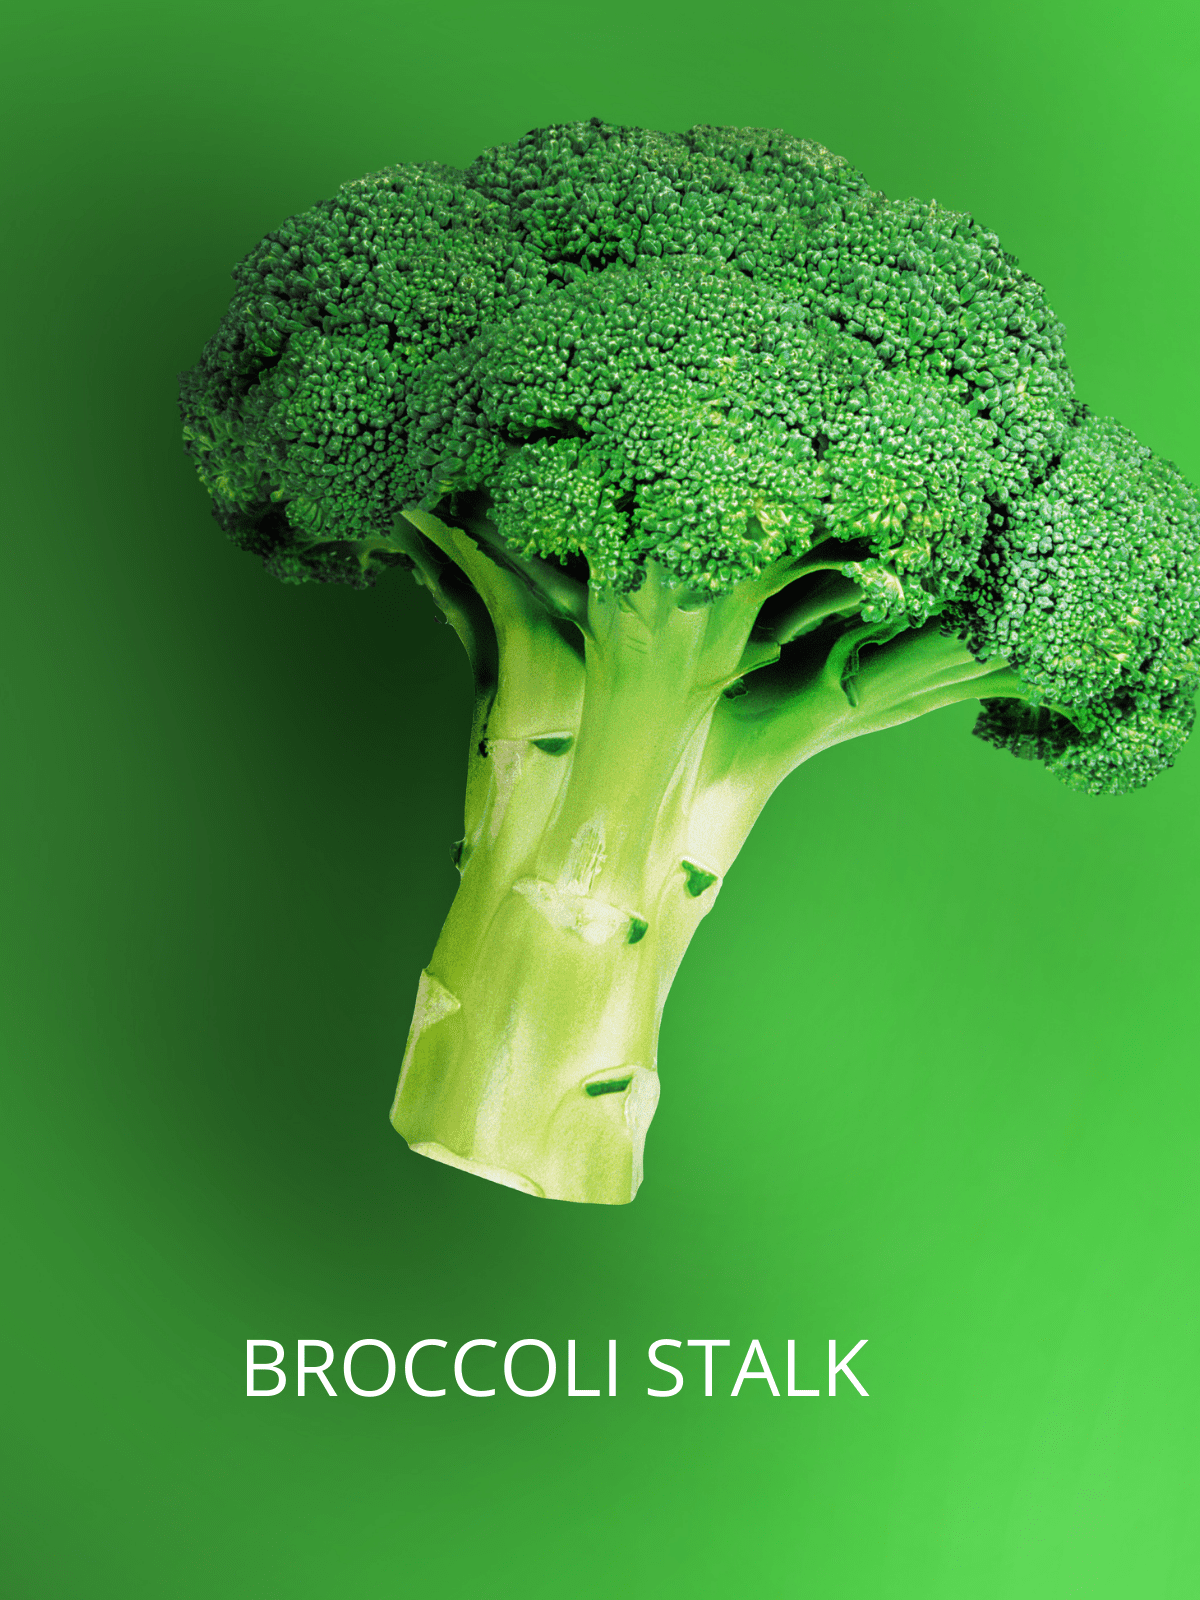 A large stalk of broccoli.